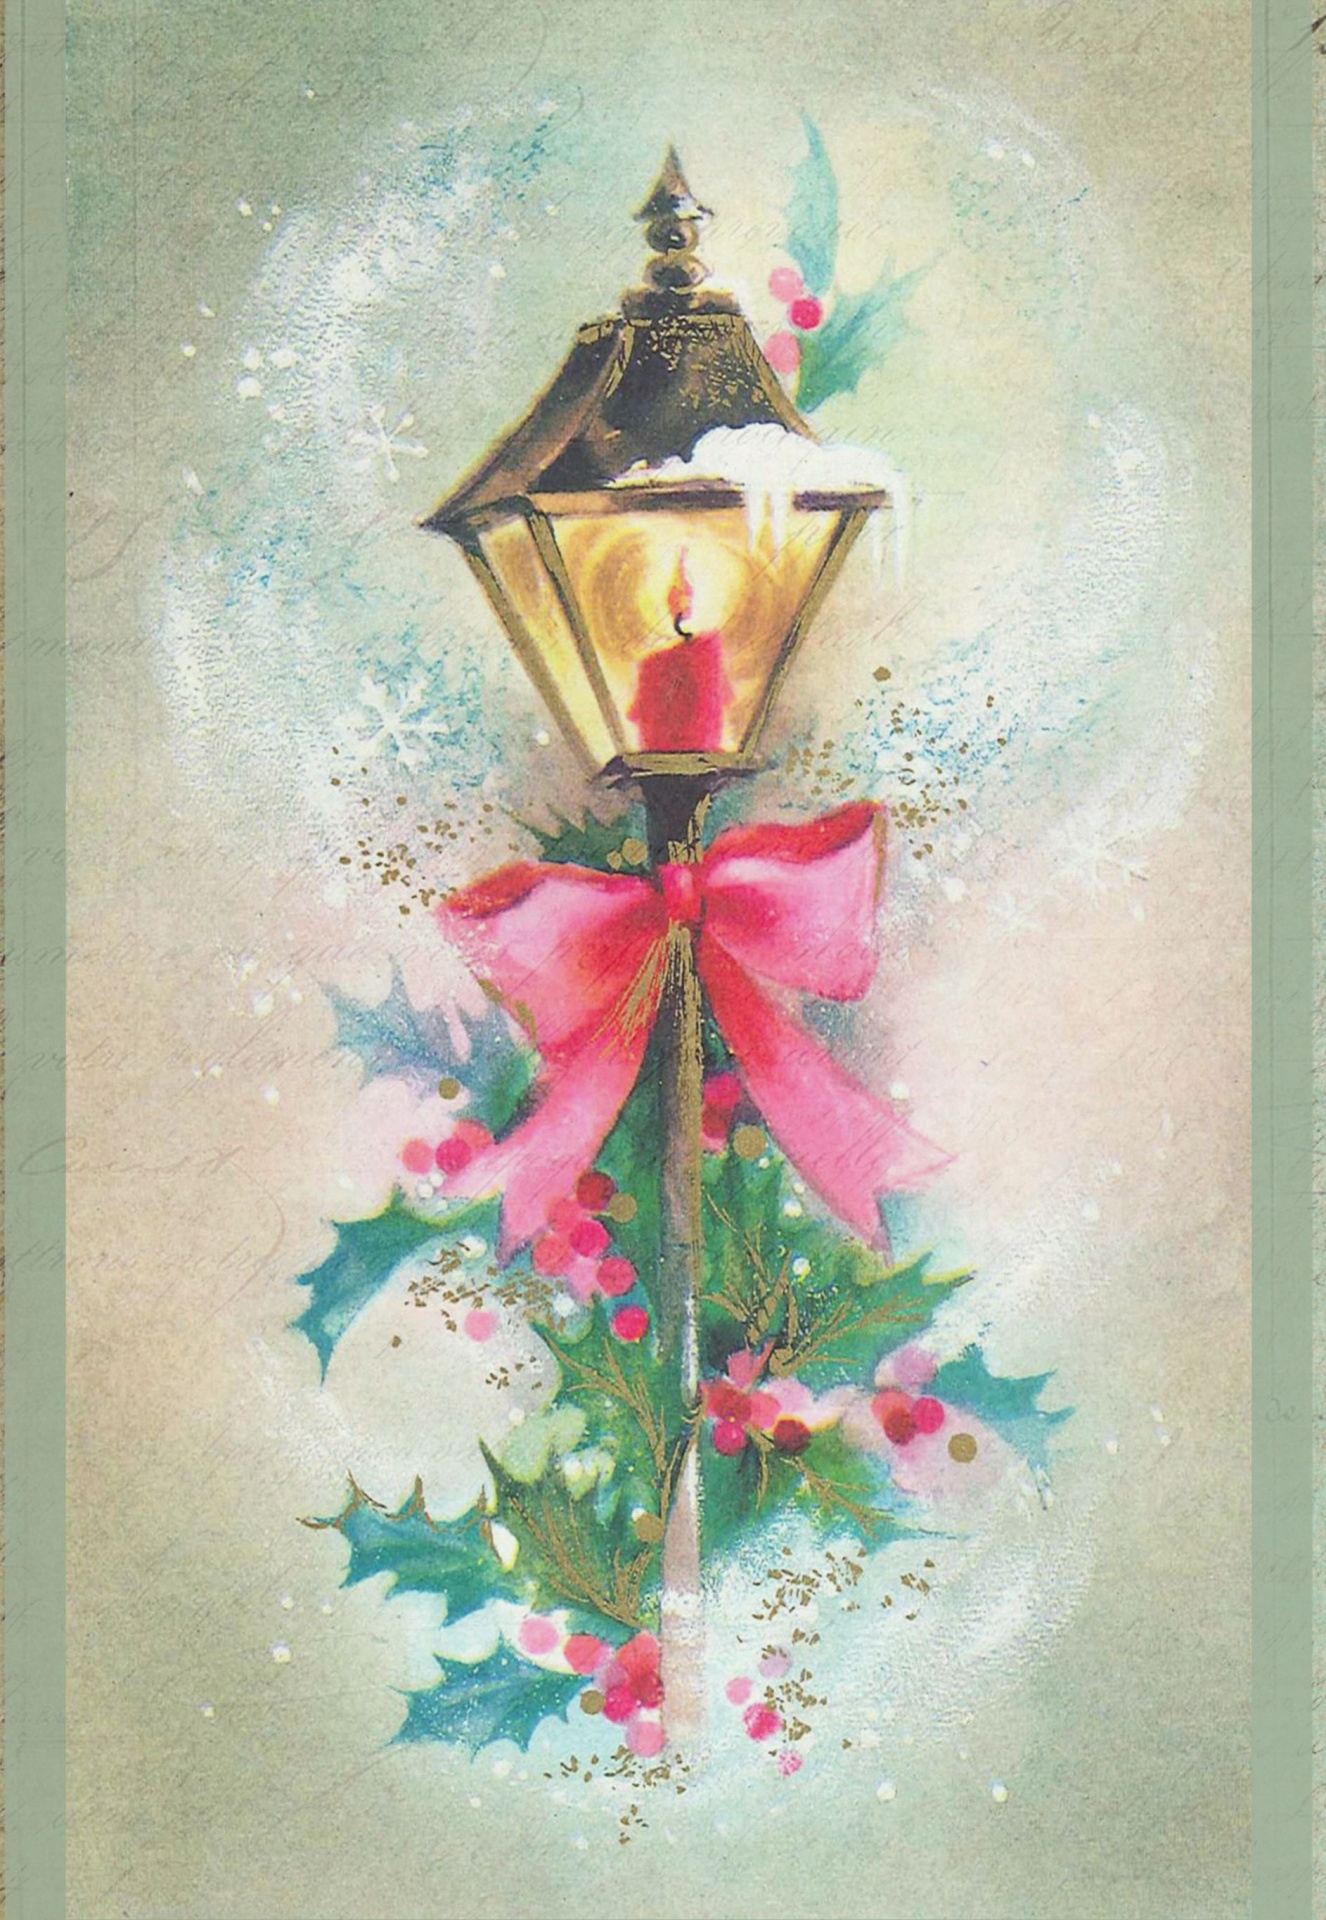 Vintage Christmas Poster